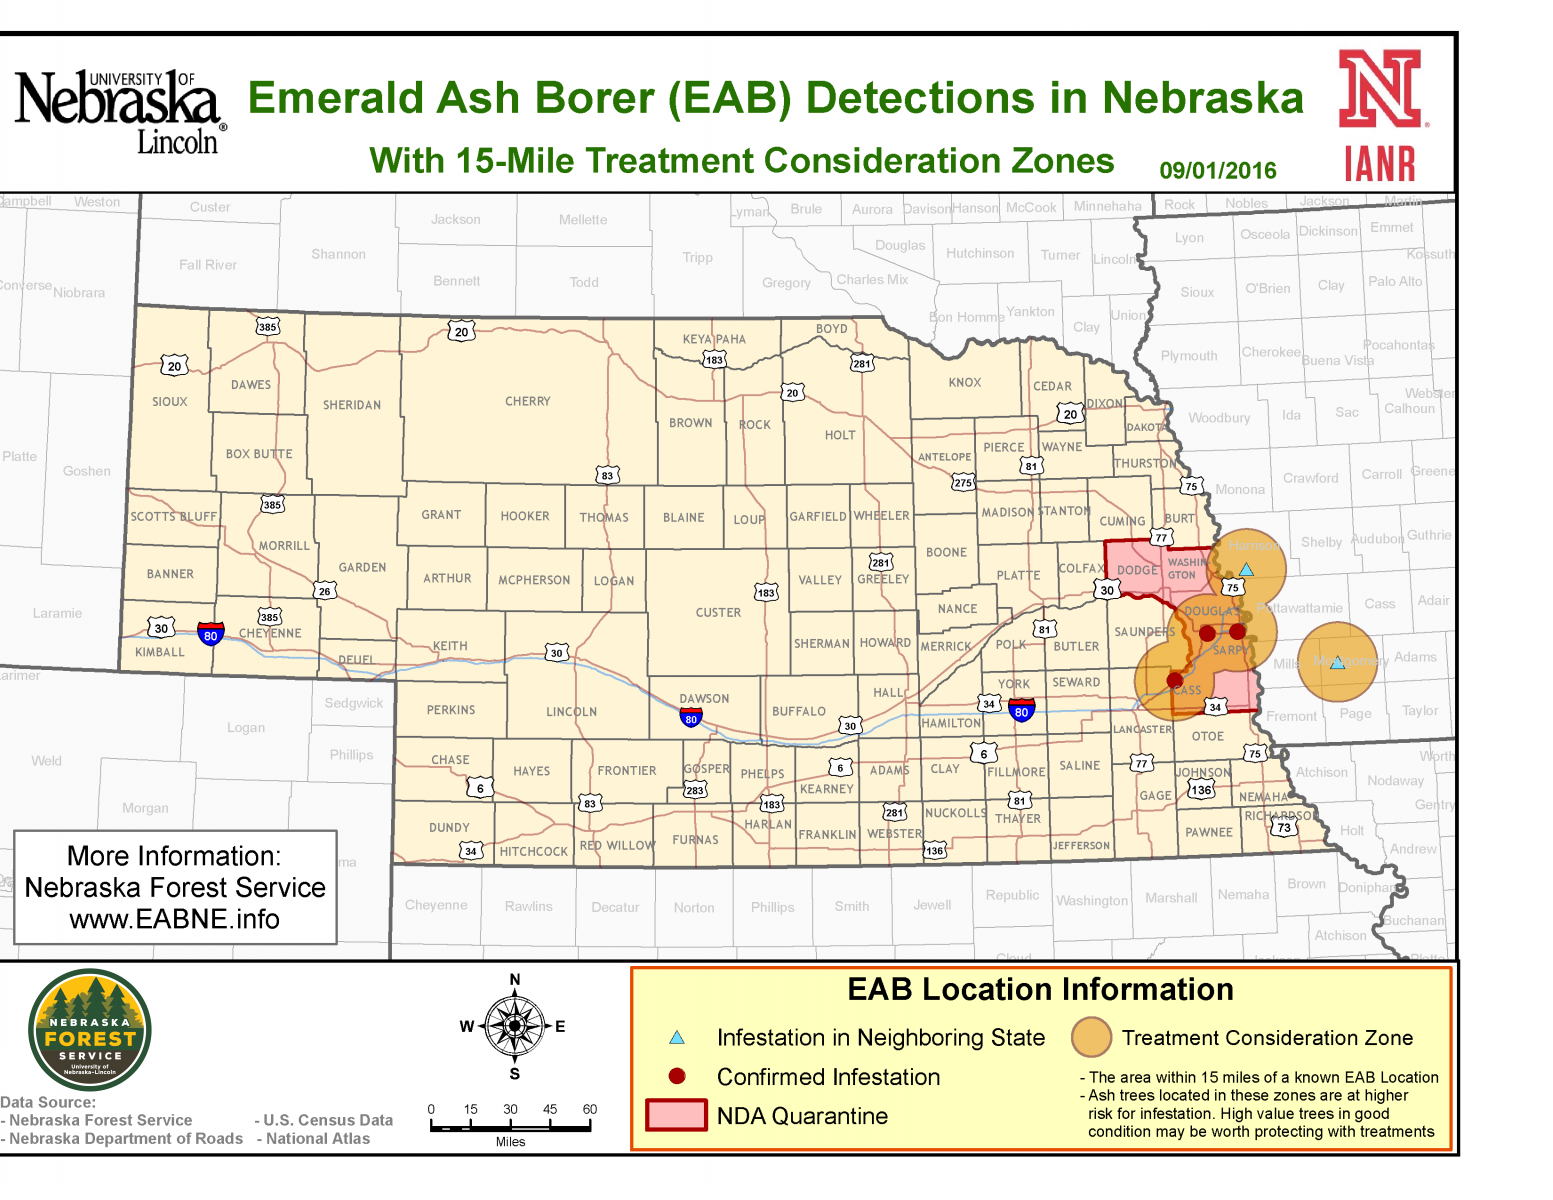 eab-information-for-lawmakers-nebraska-forest-service